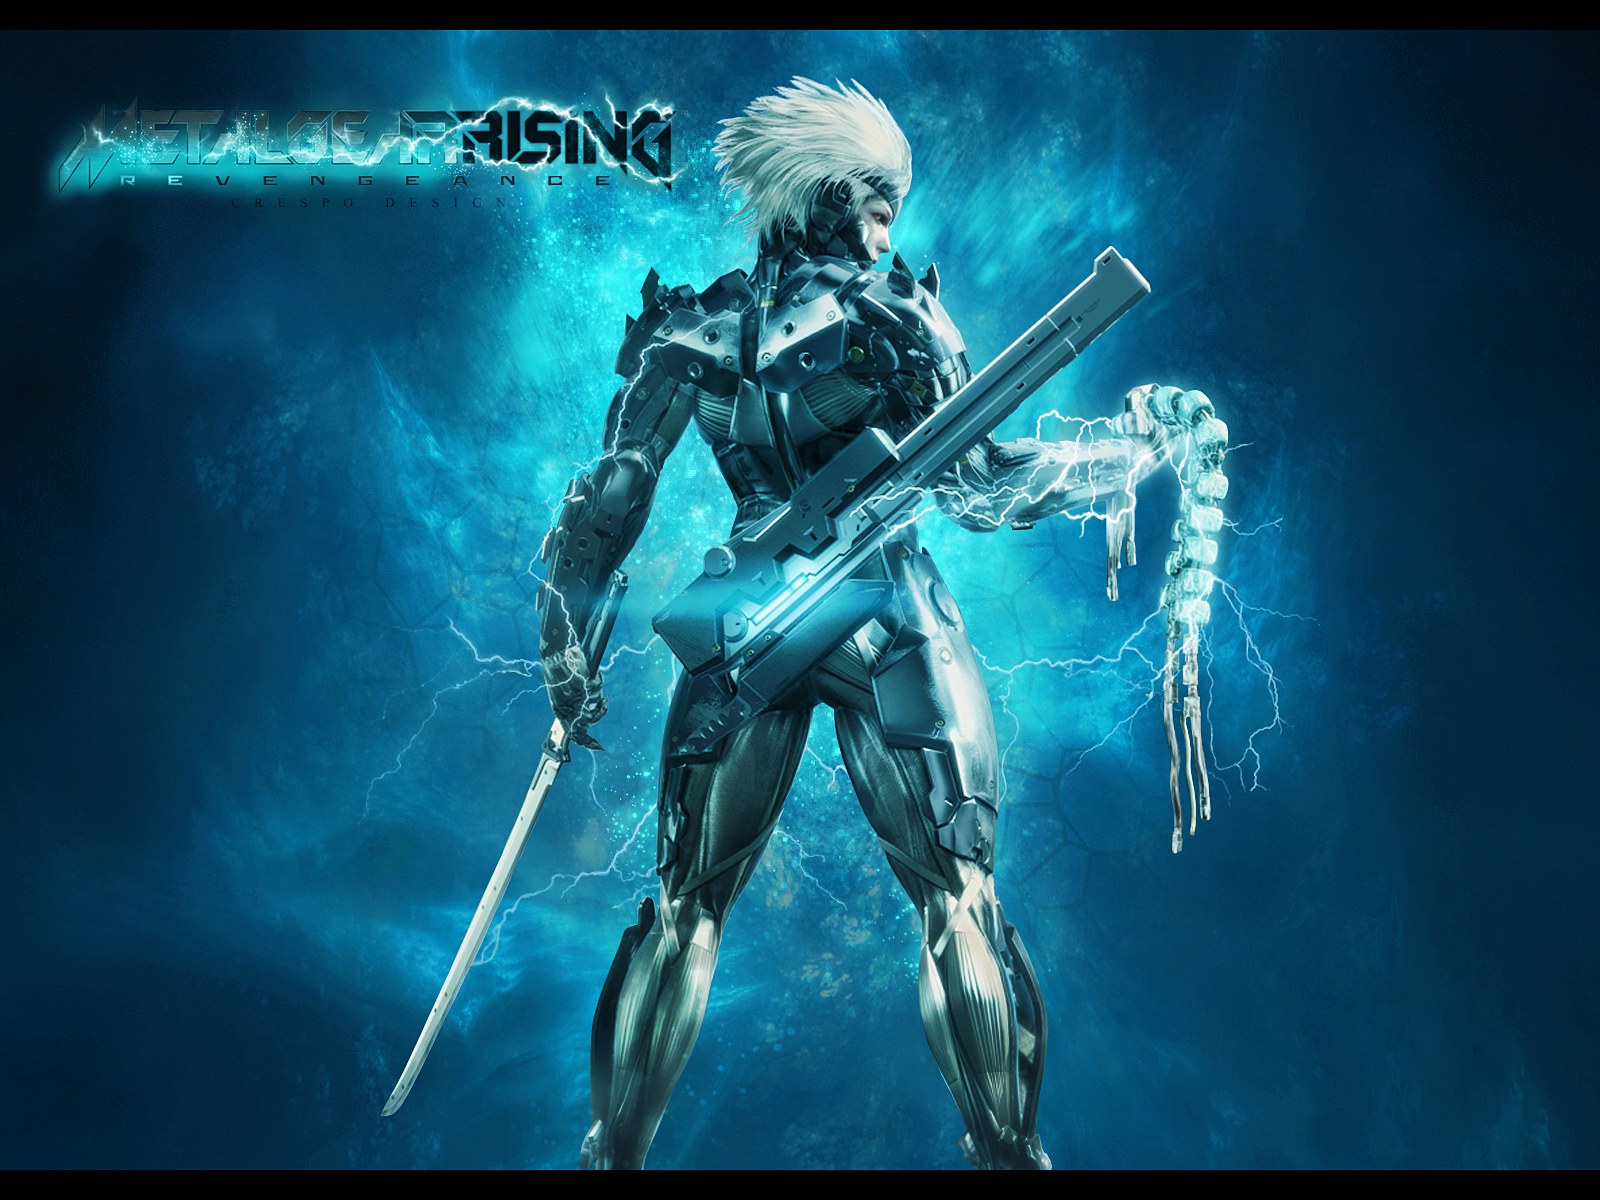 Metal Gear Rising Revengeance Wallpaper By Cre5po